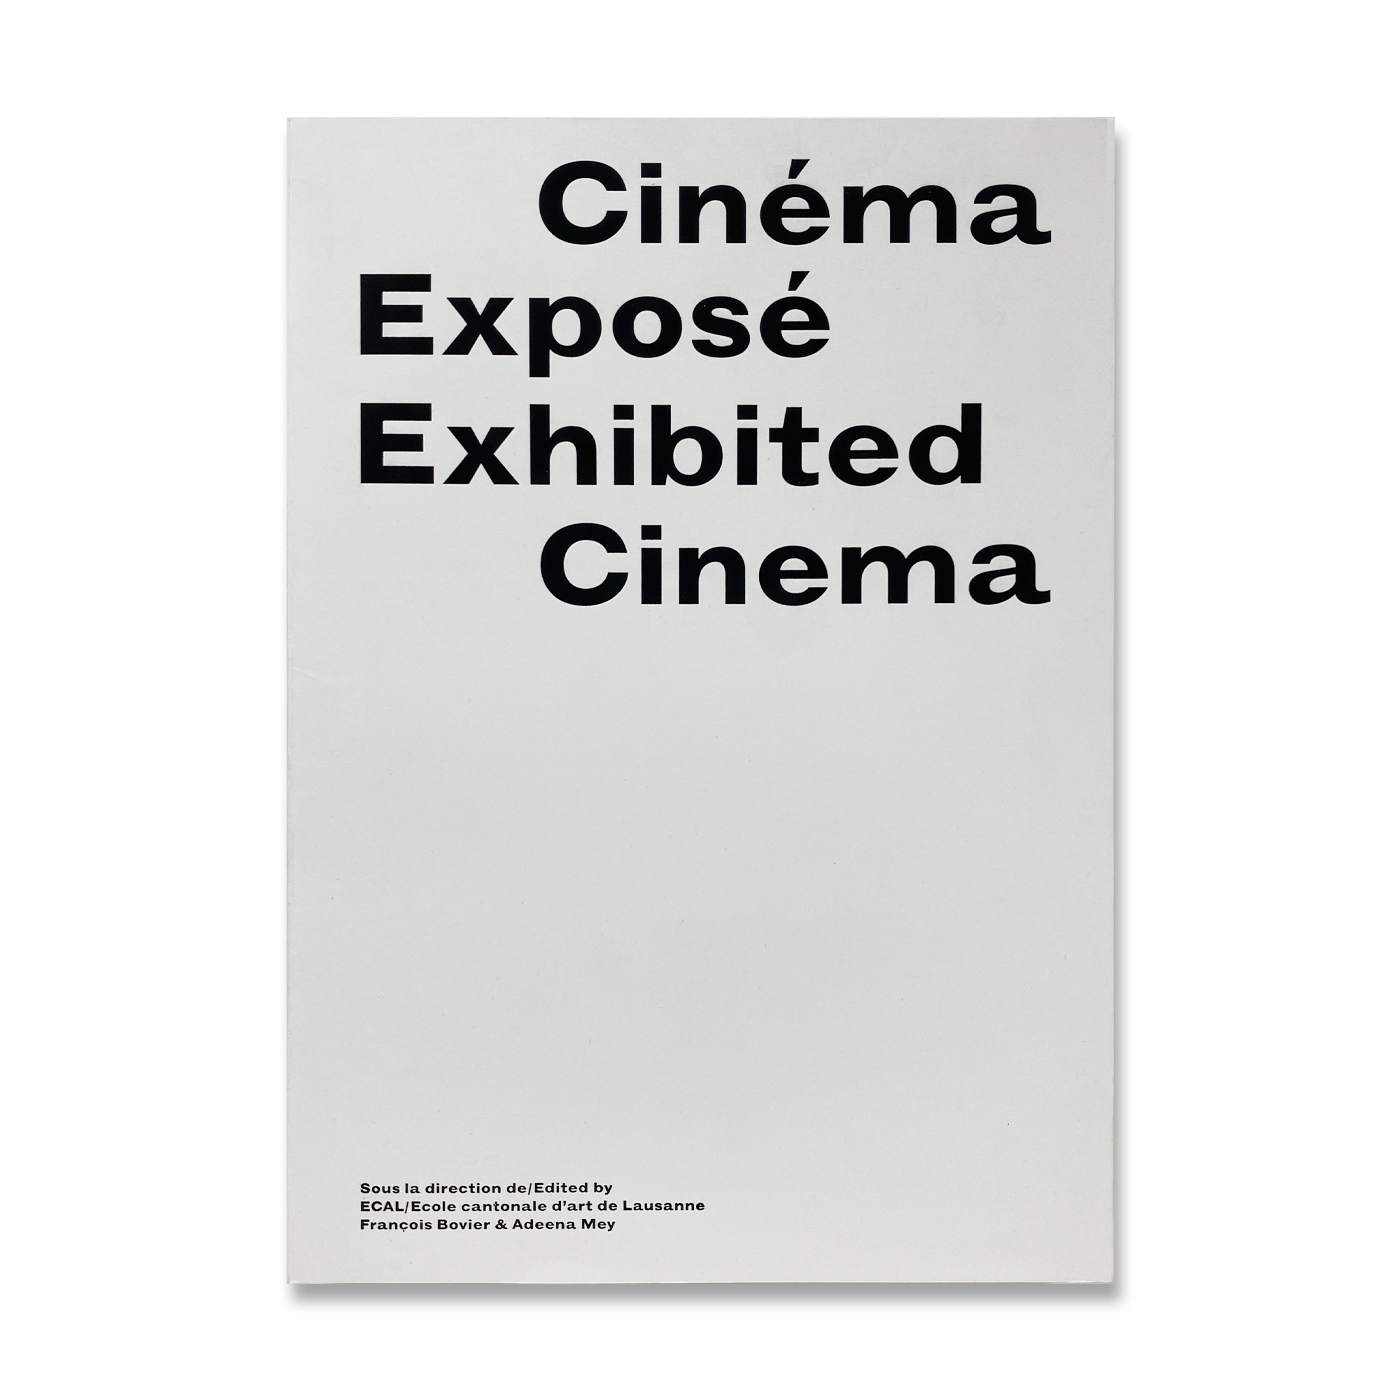 Cinéma Exposé – Exhibited Cinema